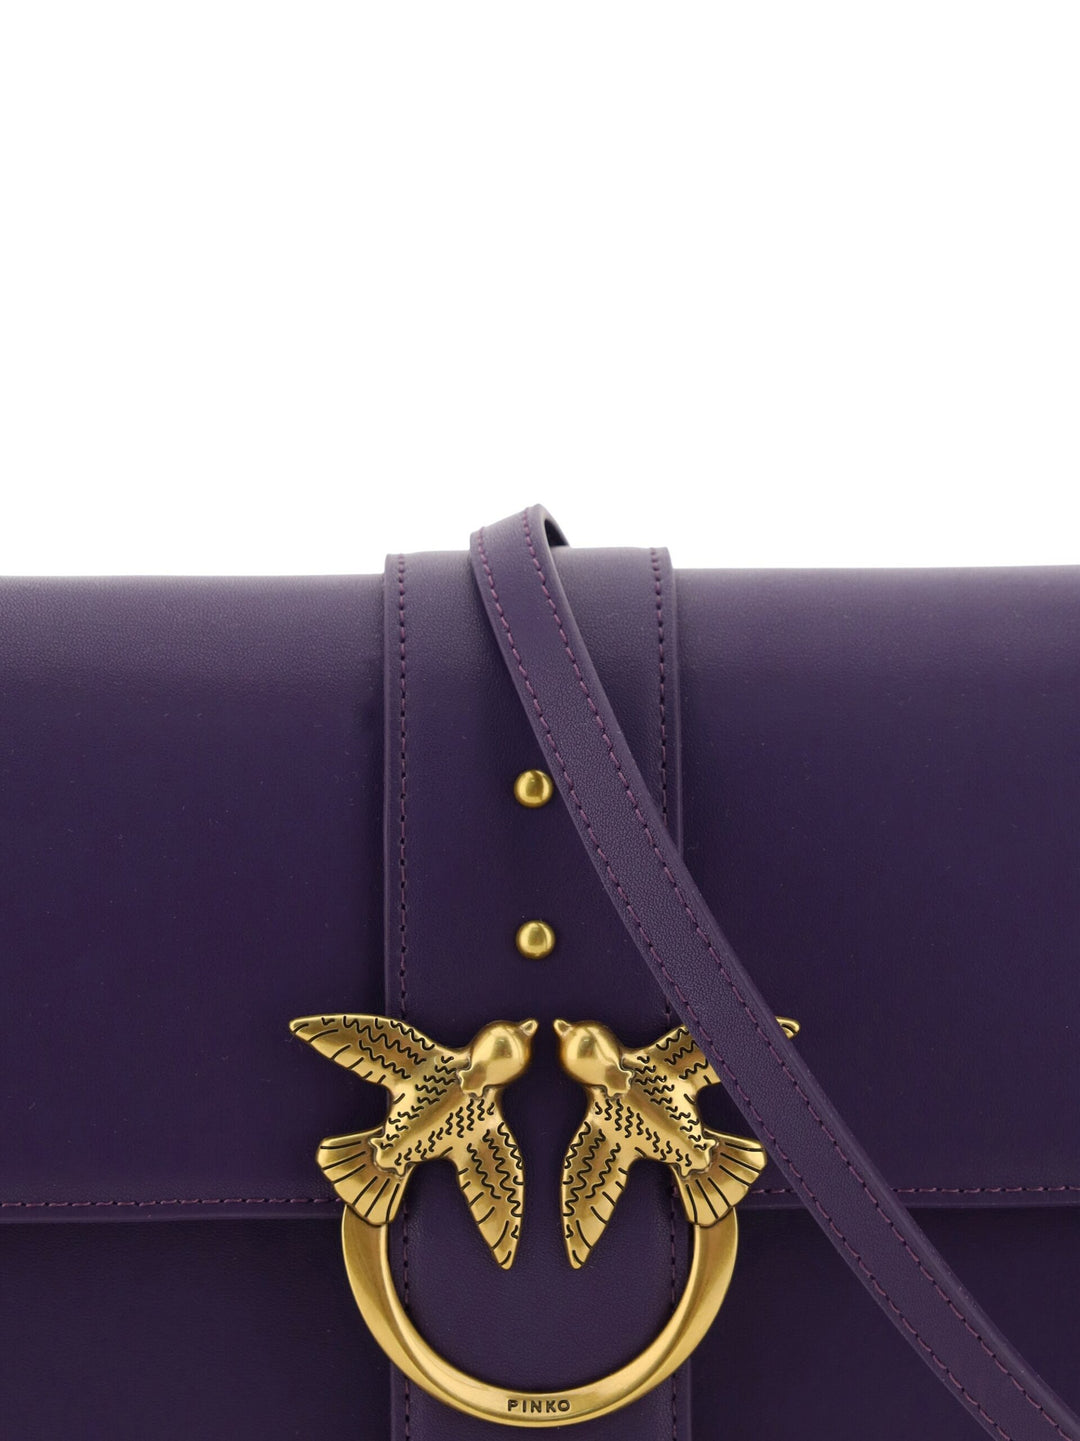 PINKO Purple Leather Love One Classic Shoulder Bag